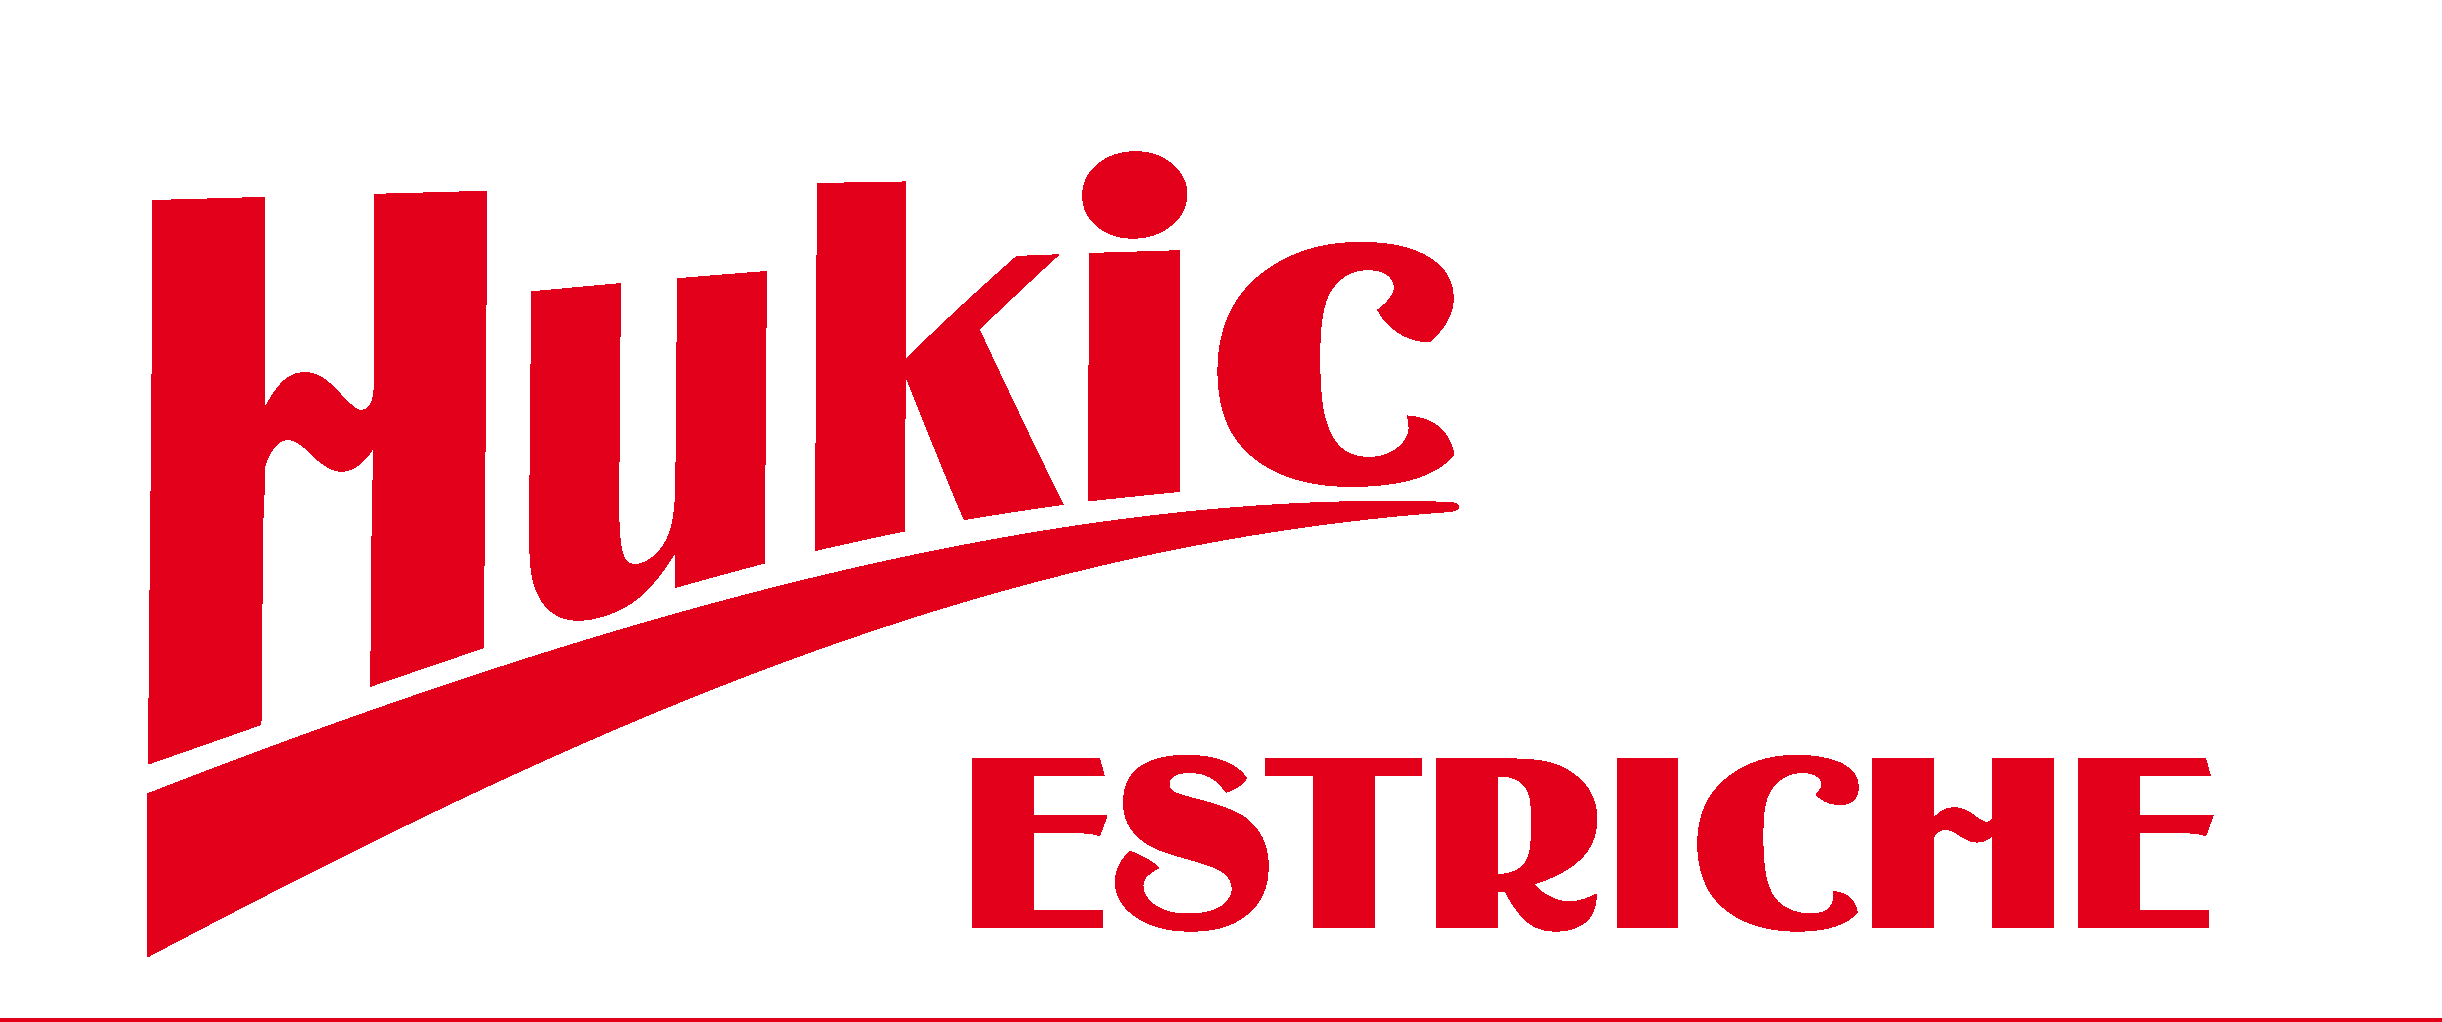 Hukic_Logo_final